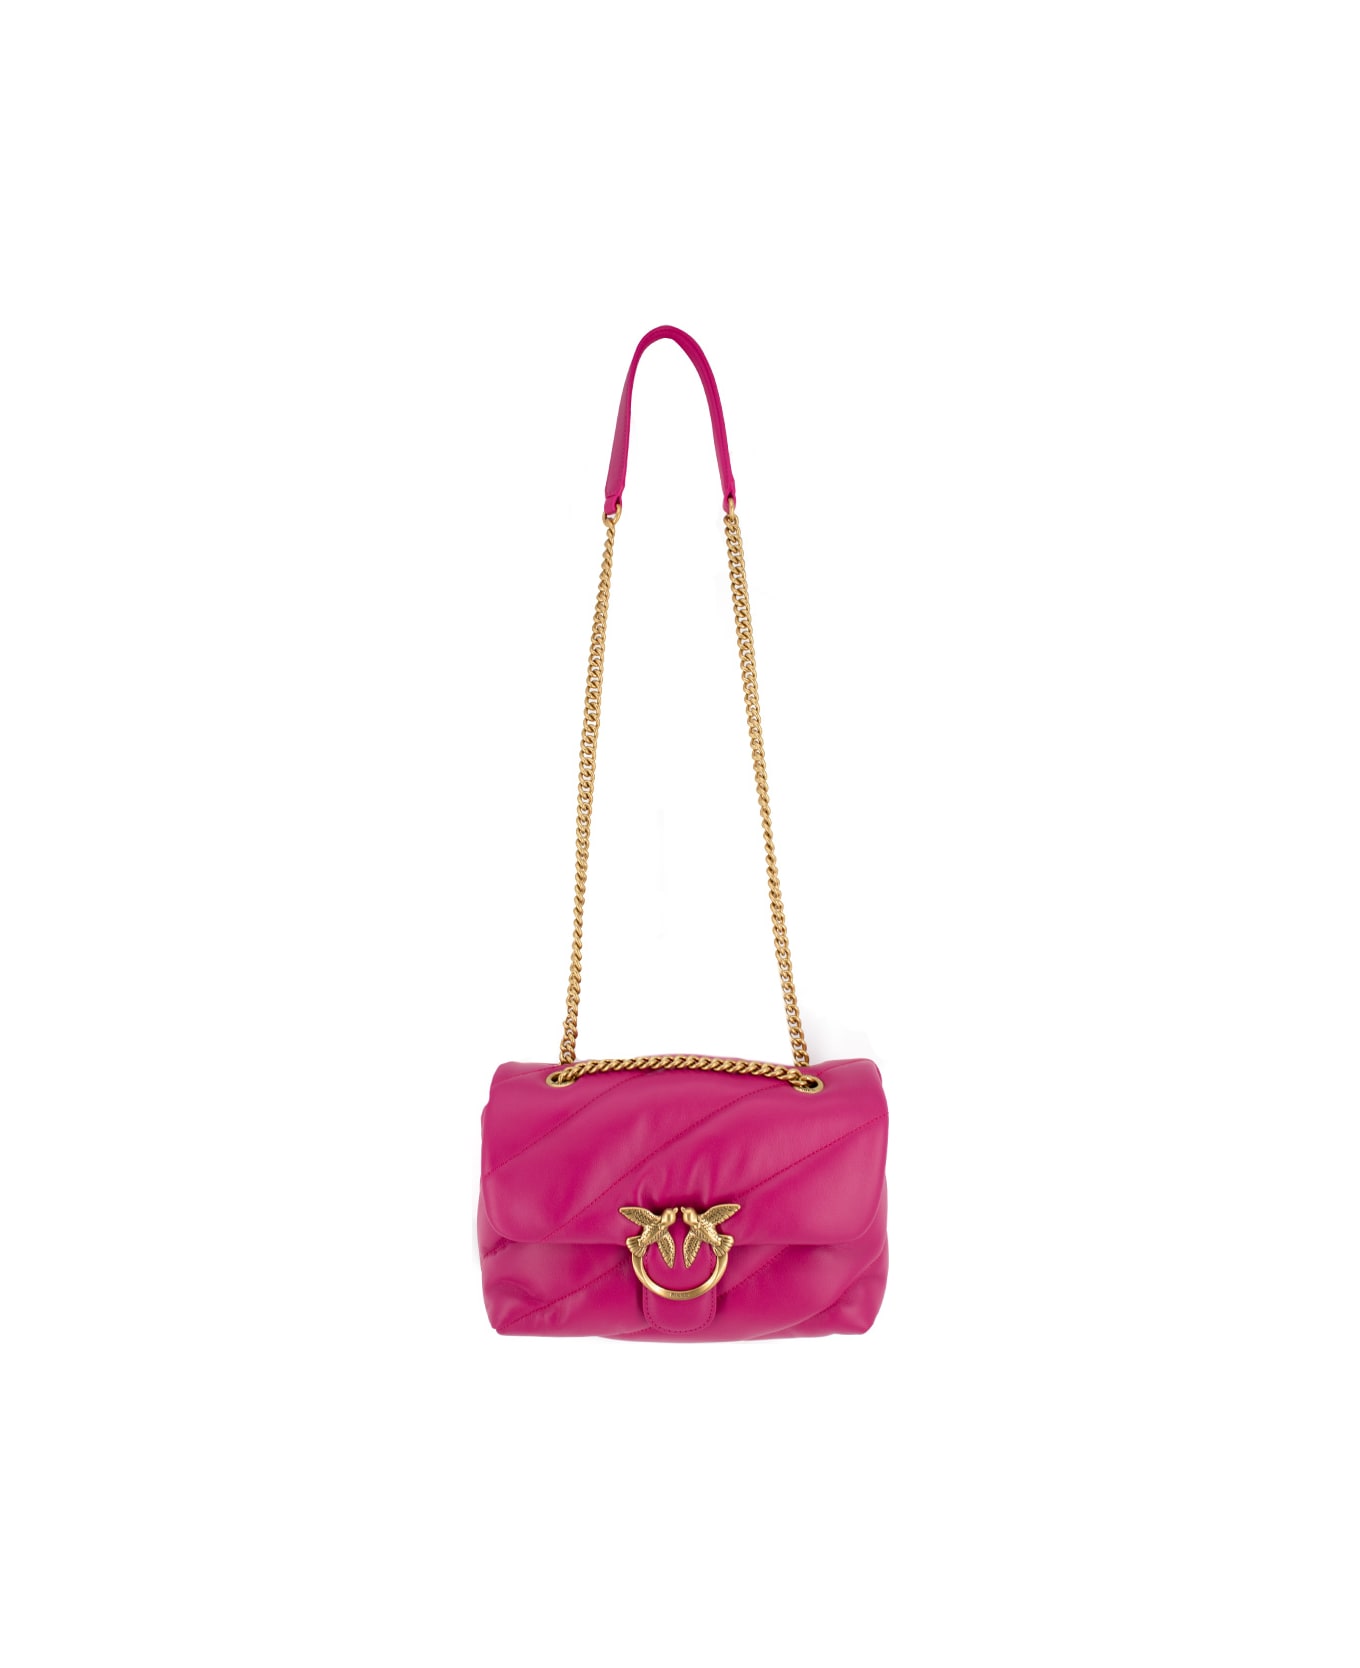 Pinko Classic Love Bag Puff Maxi Quilt Shoulder Bag - PINK PINKO ANTIQUE GOLD ショルダーバッグ